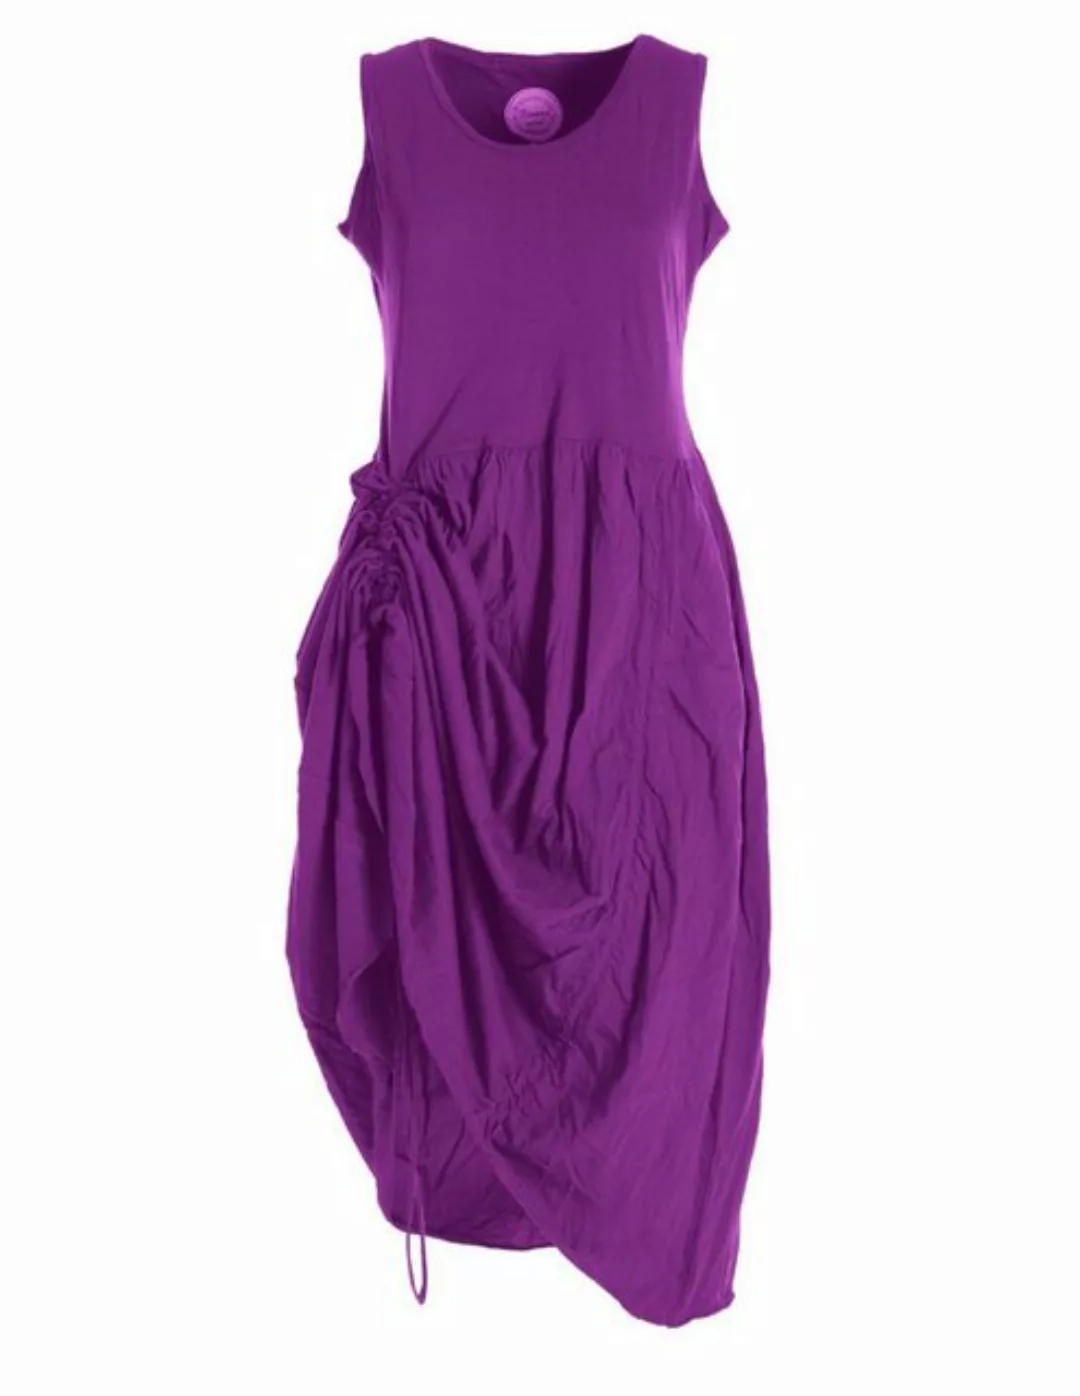 Vishes Sommerkleid Verstellbares langes oder kurzes Sommerkleid Boho, Festi günstig online kaufen